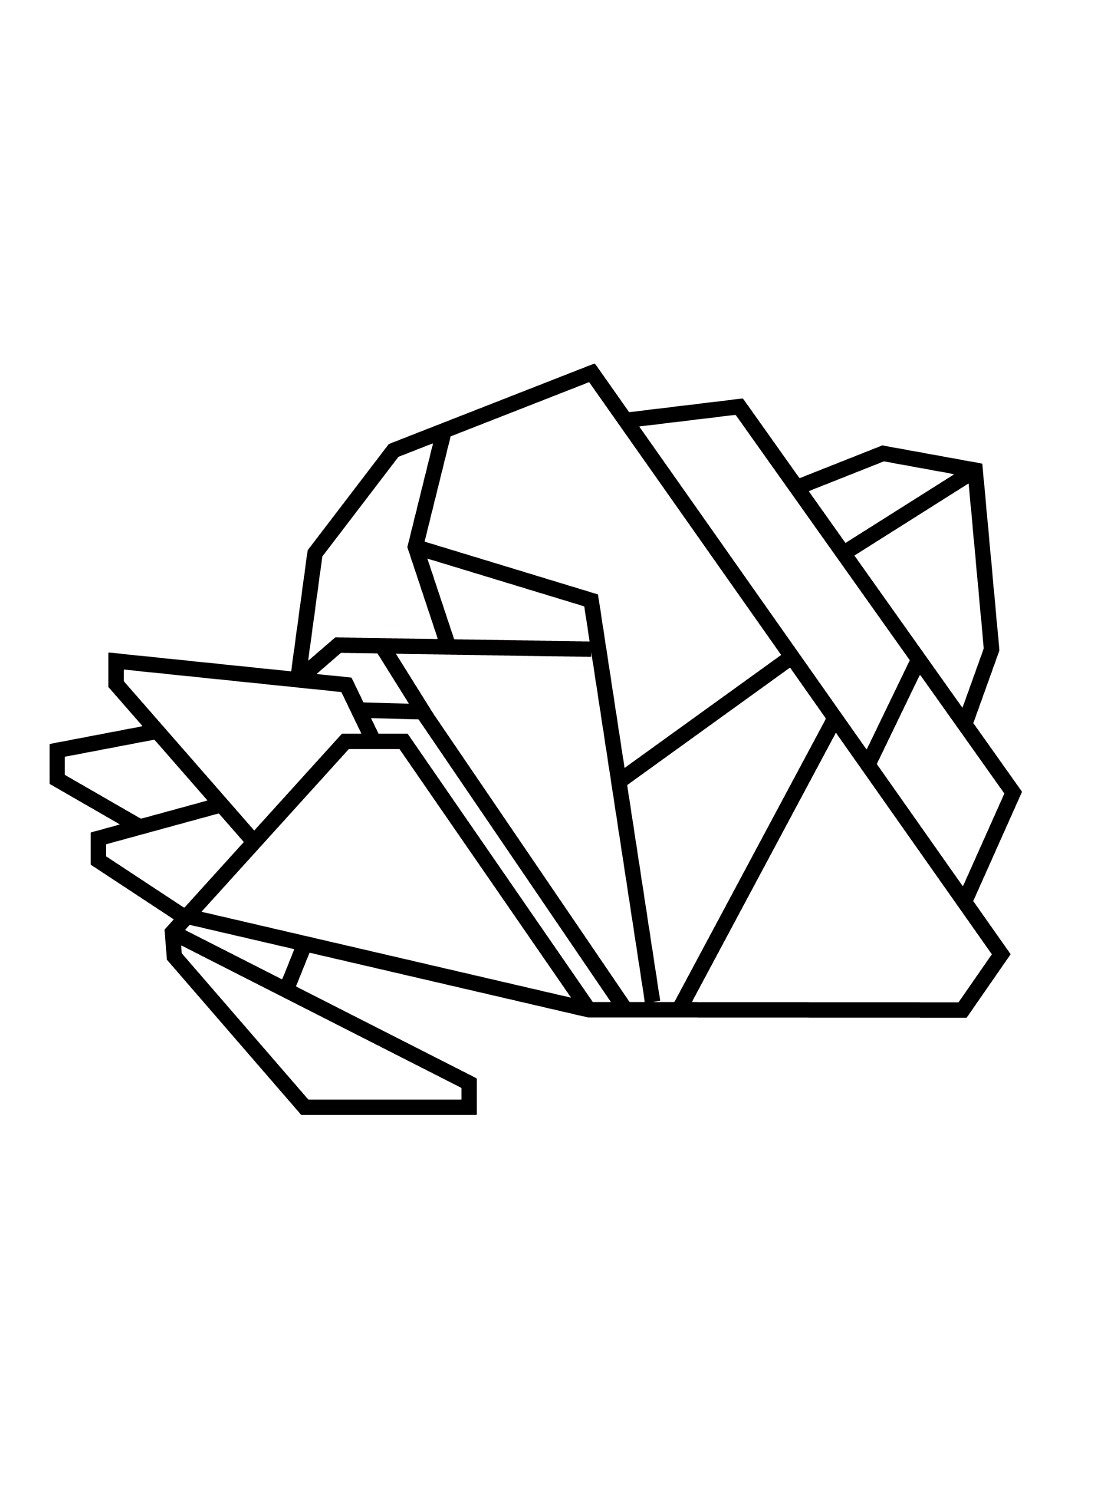 Origami de cangrejo ermitaño de cangrejo ermitaño